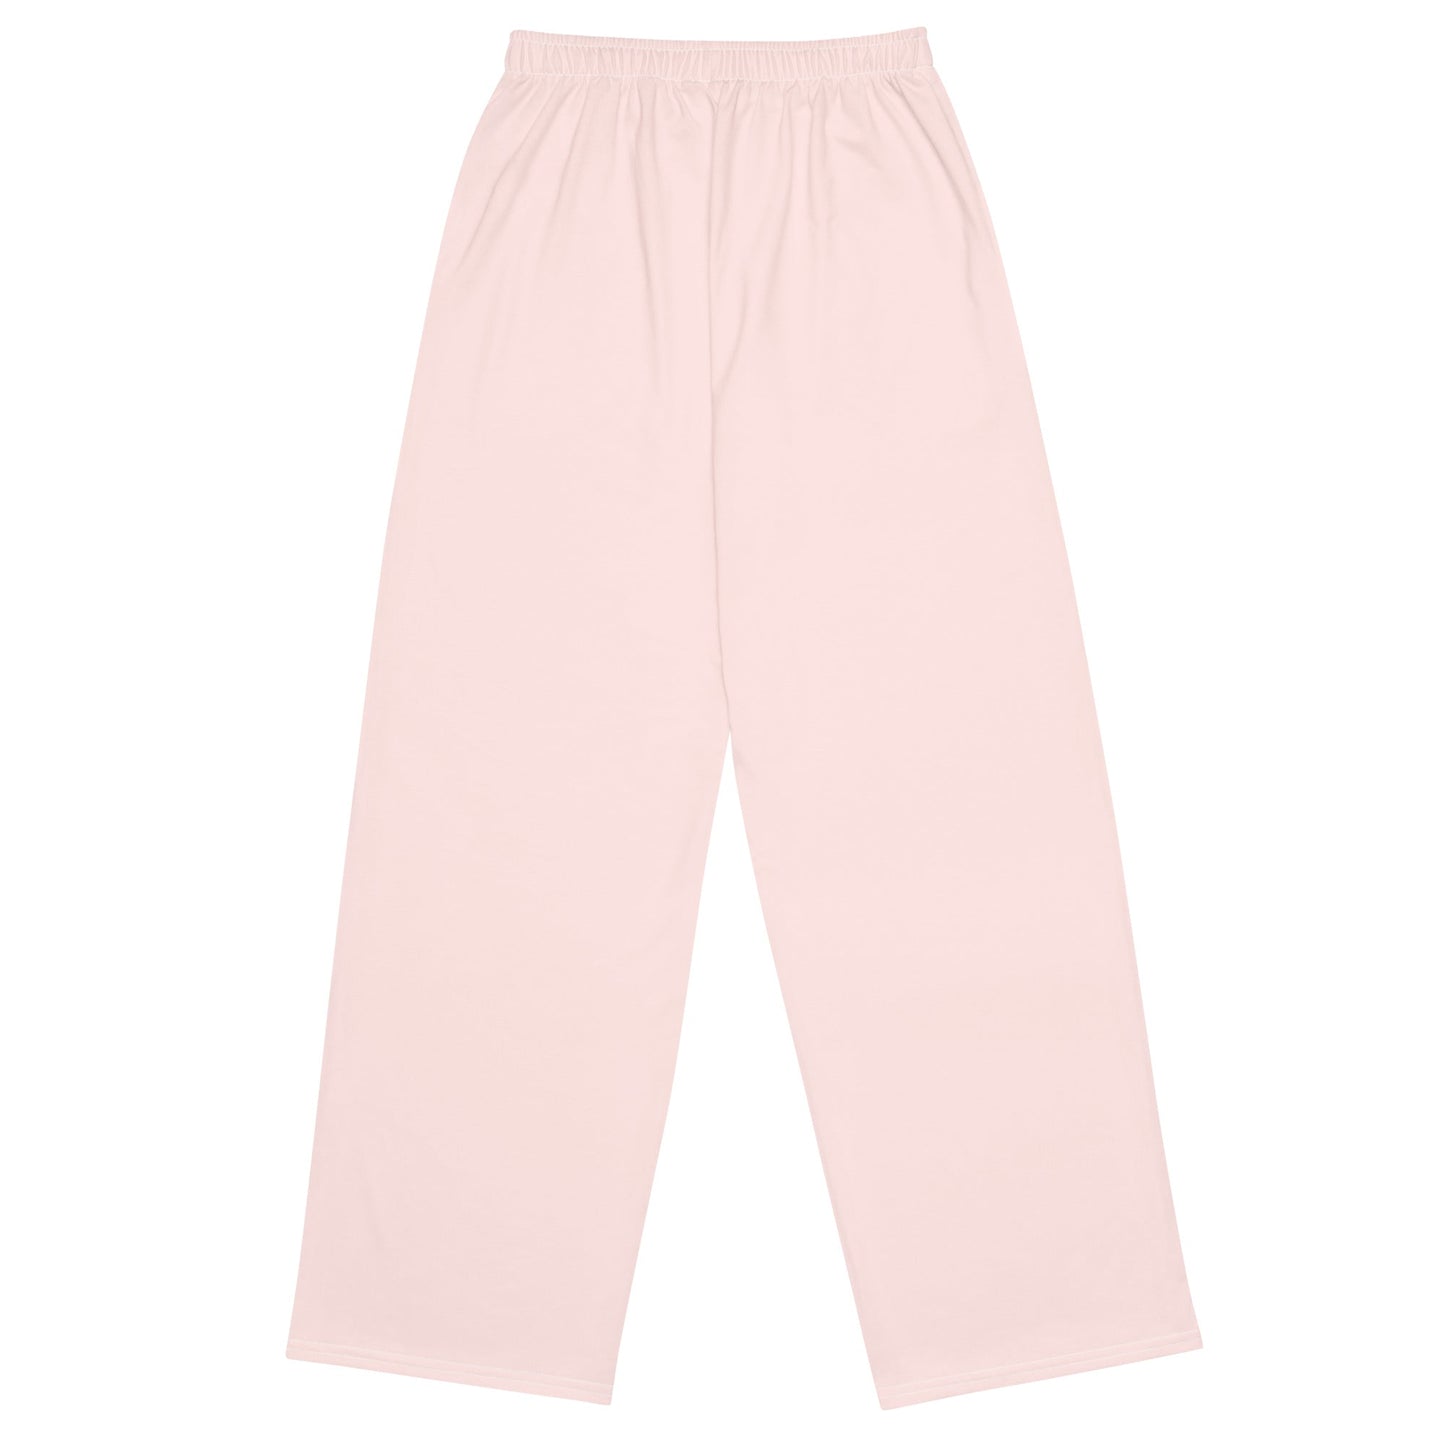 Womens Pink Lounge Pants - Tropical Seas Clothing 